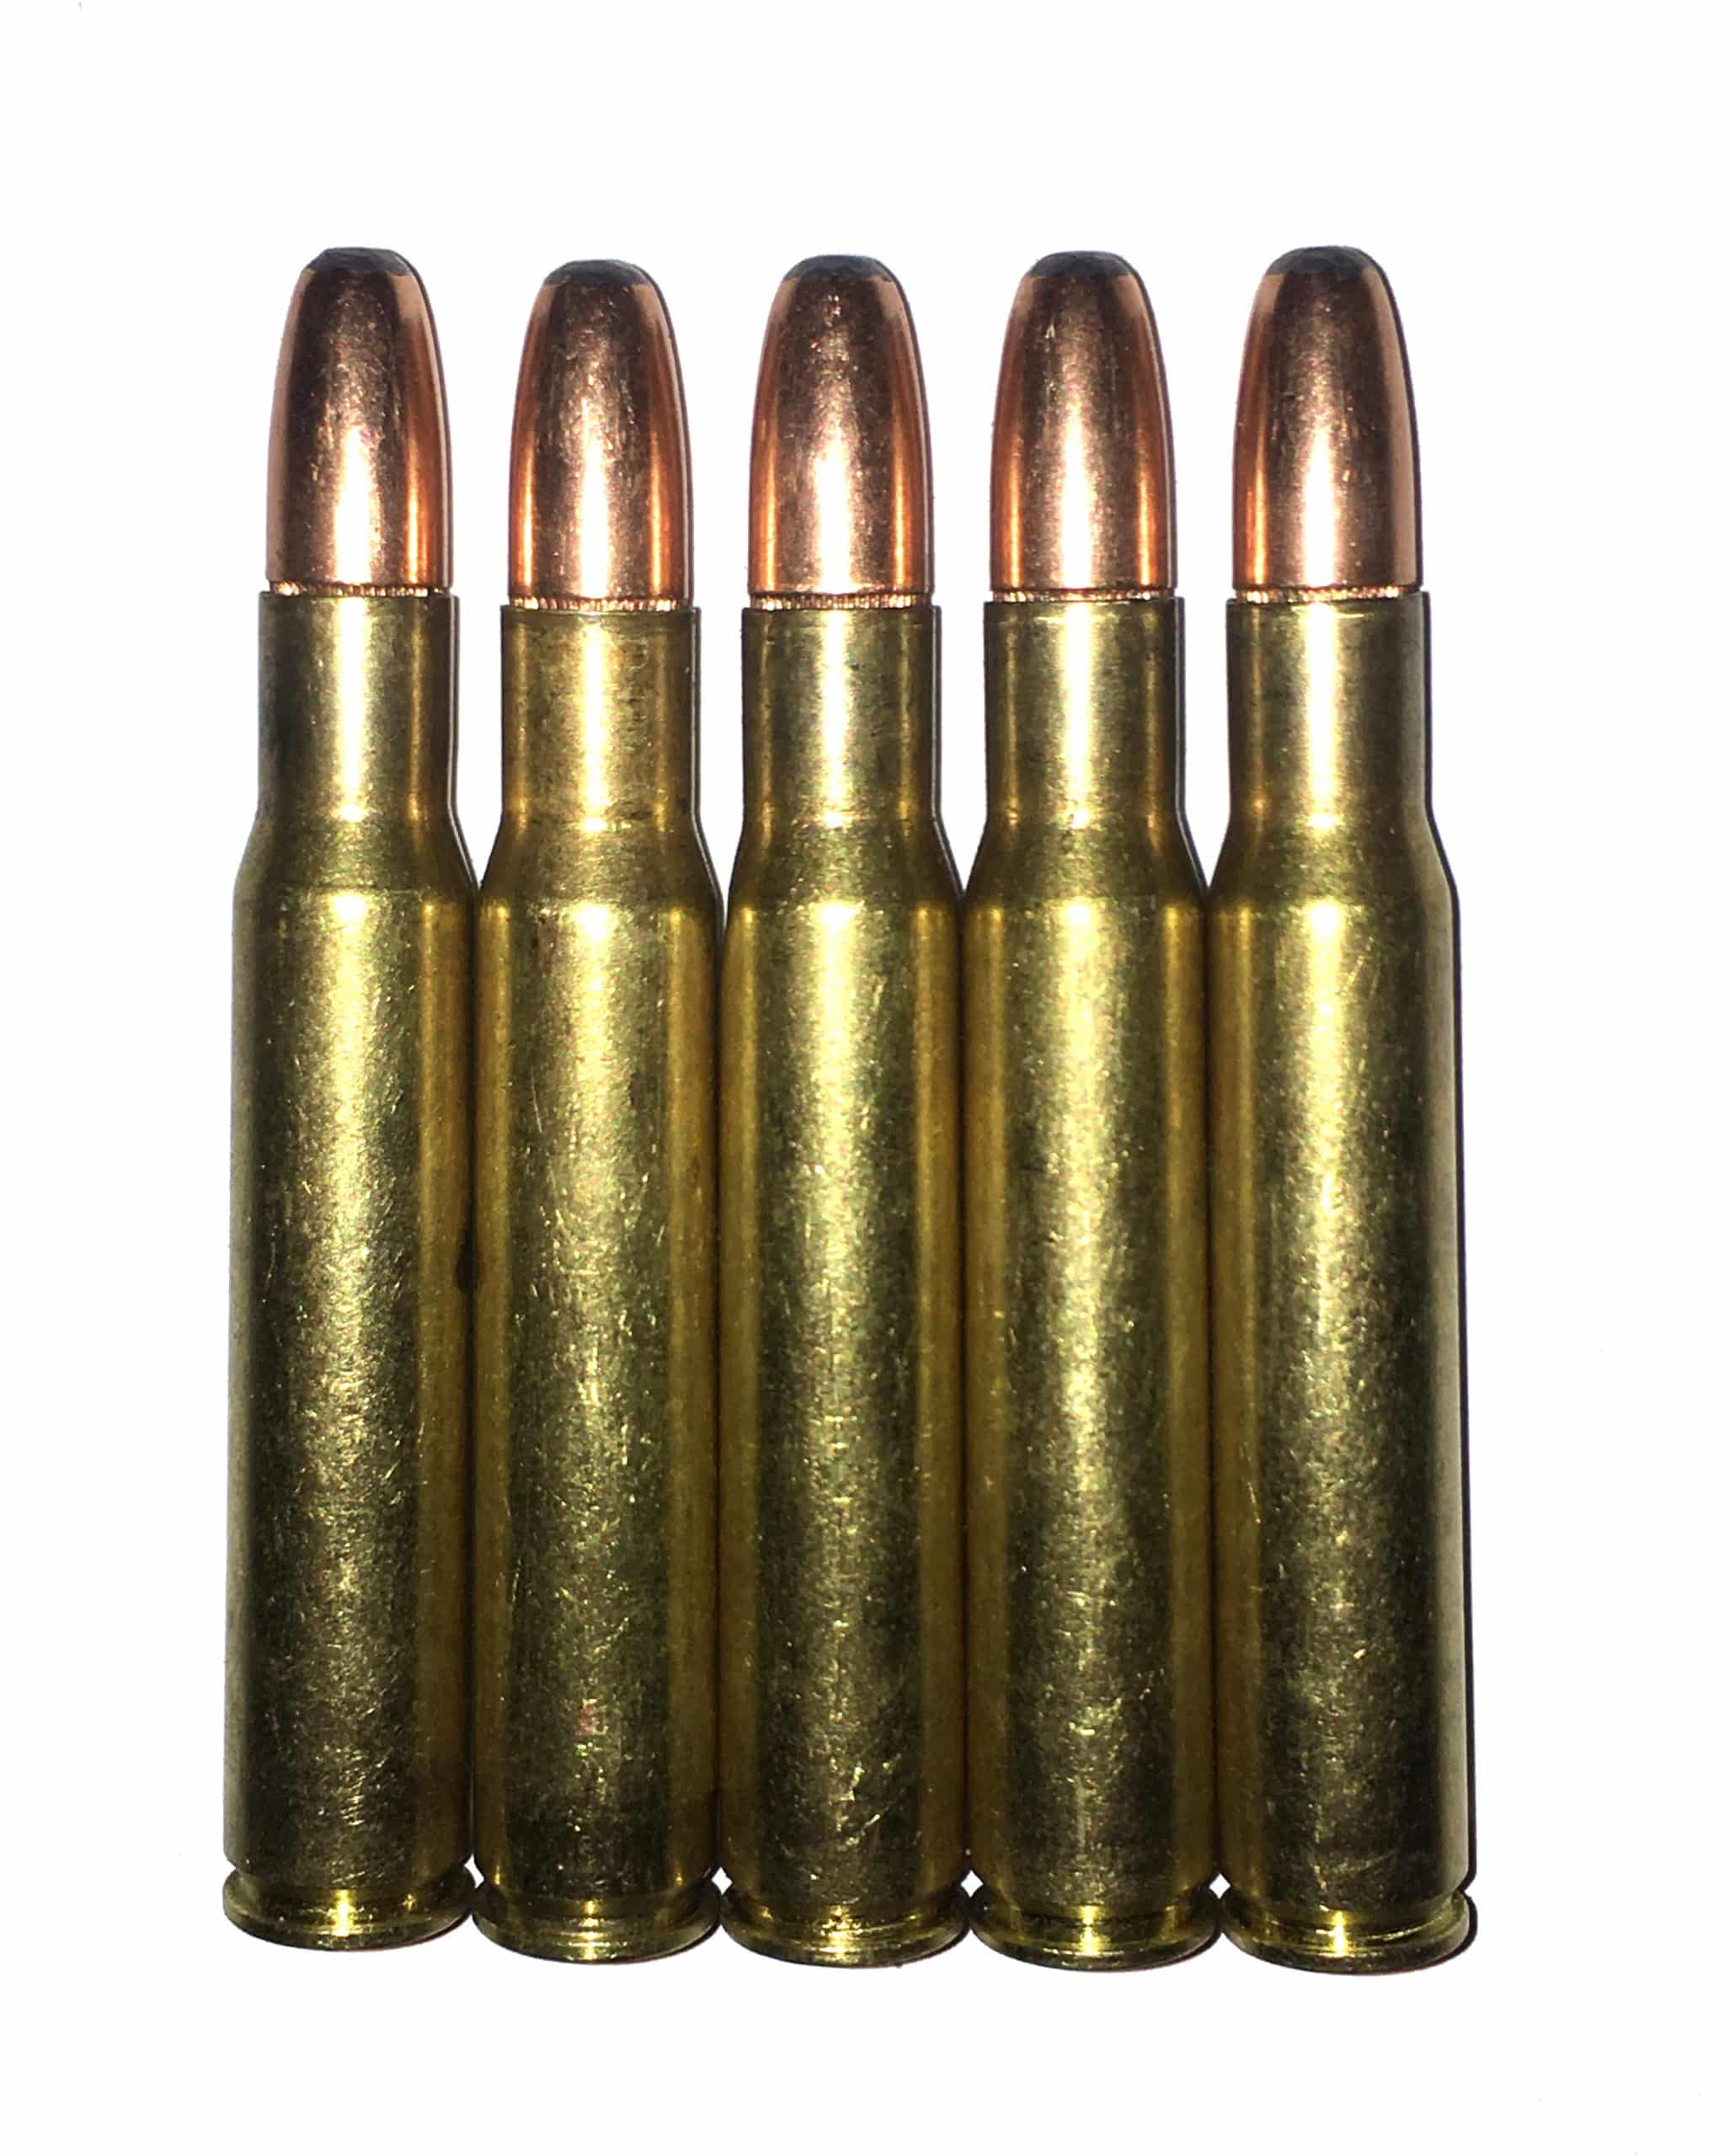 8mm-06 Mauser Snap Caps Dummy Rounds Fake Bullets J&M Spec INERT